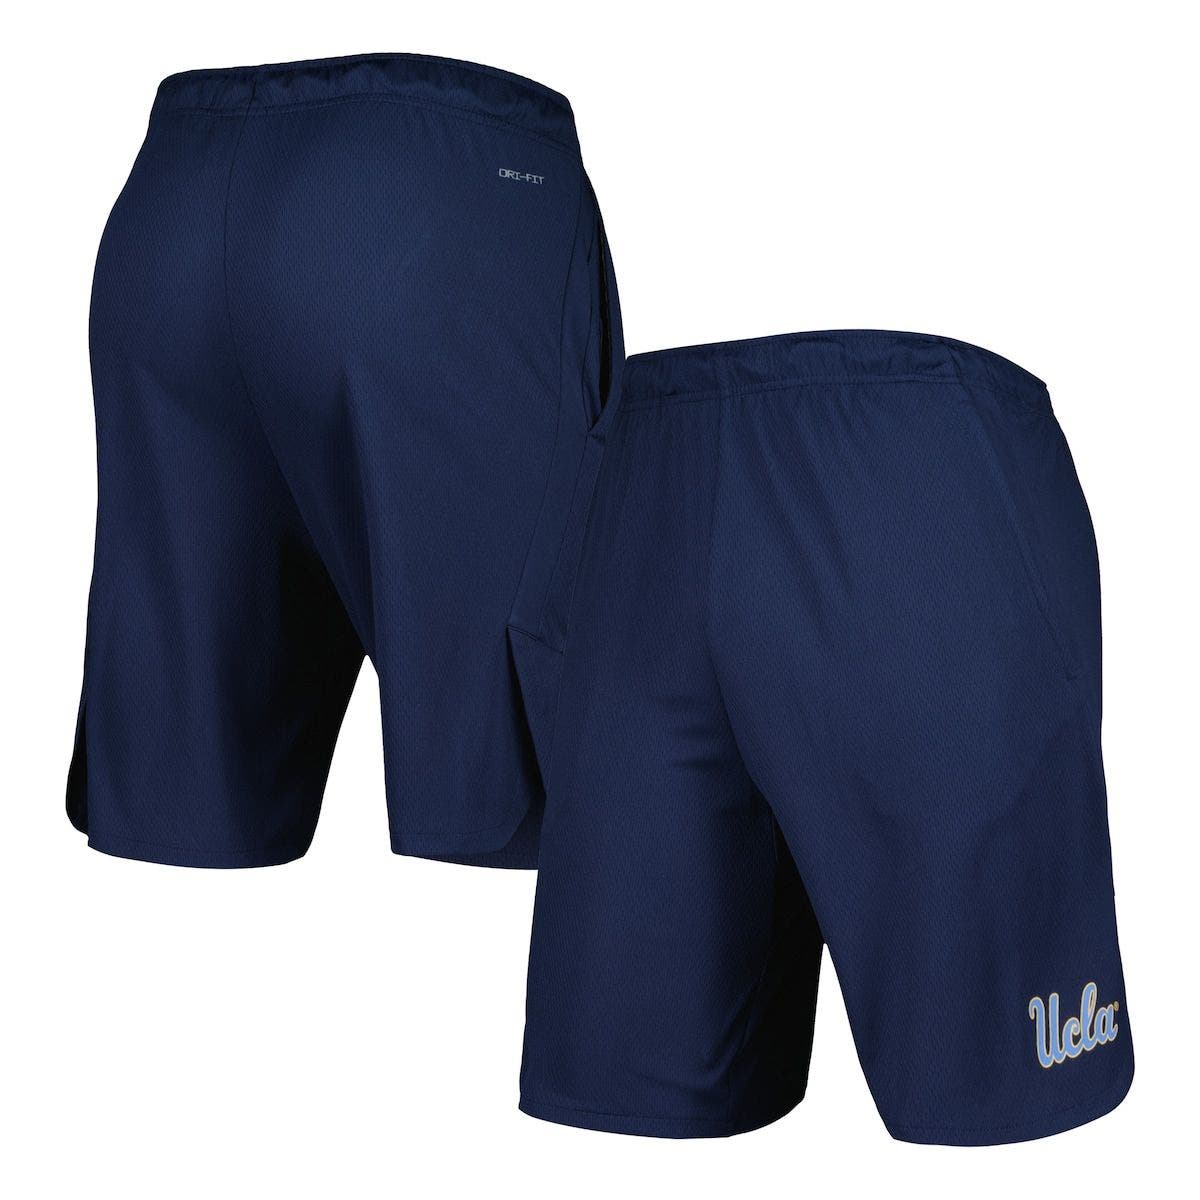 Fashion Item Hype Brand New Men’s hype Navy Blue shorts 32 ￼Waist Very Good Quality 